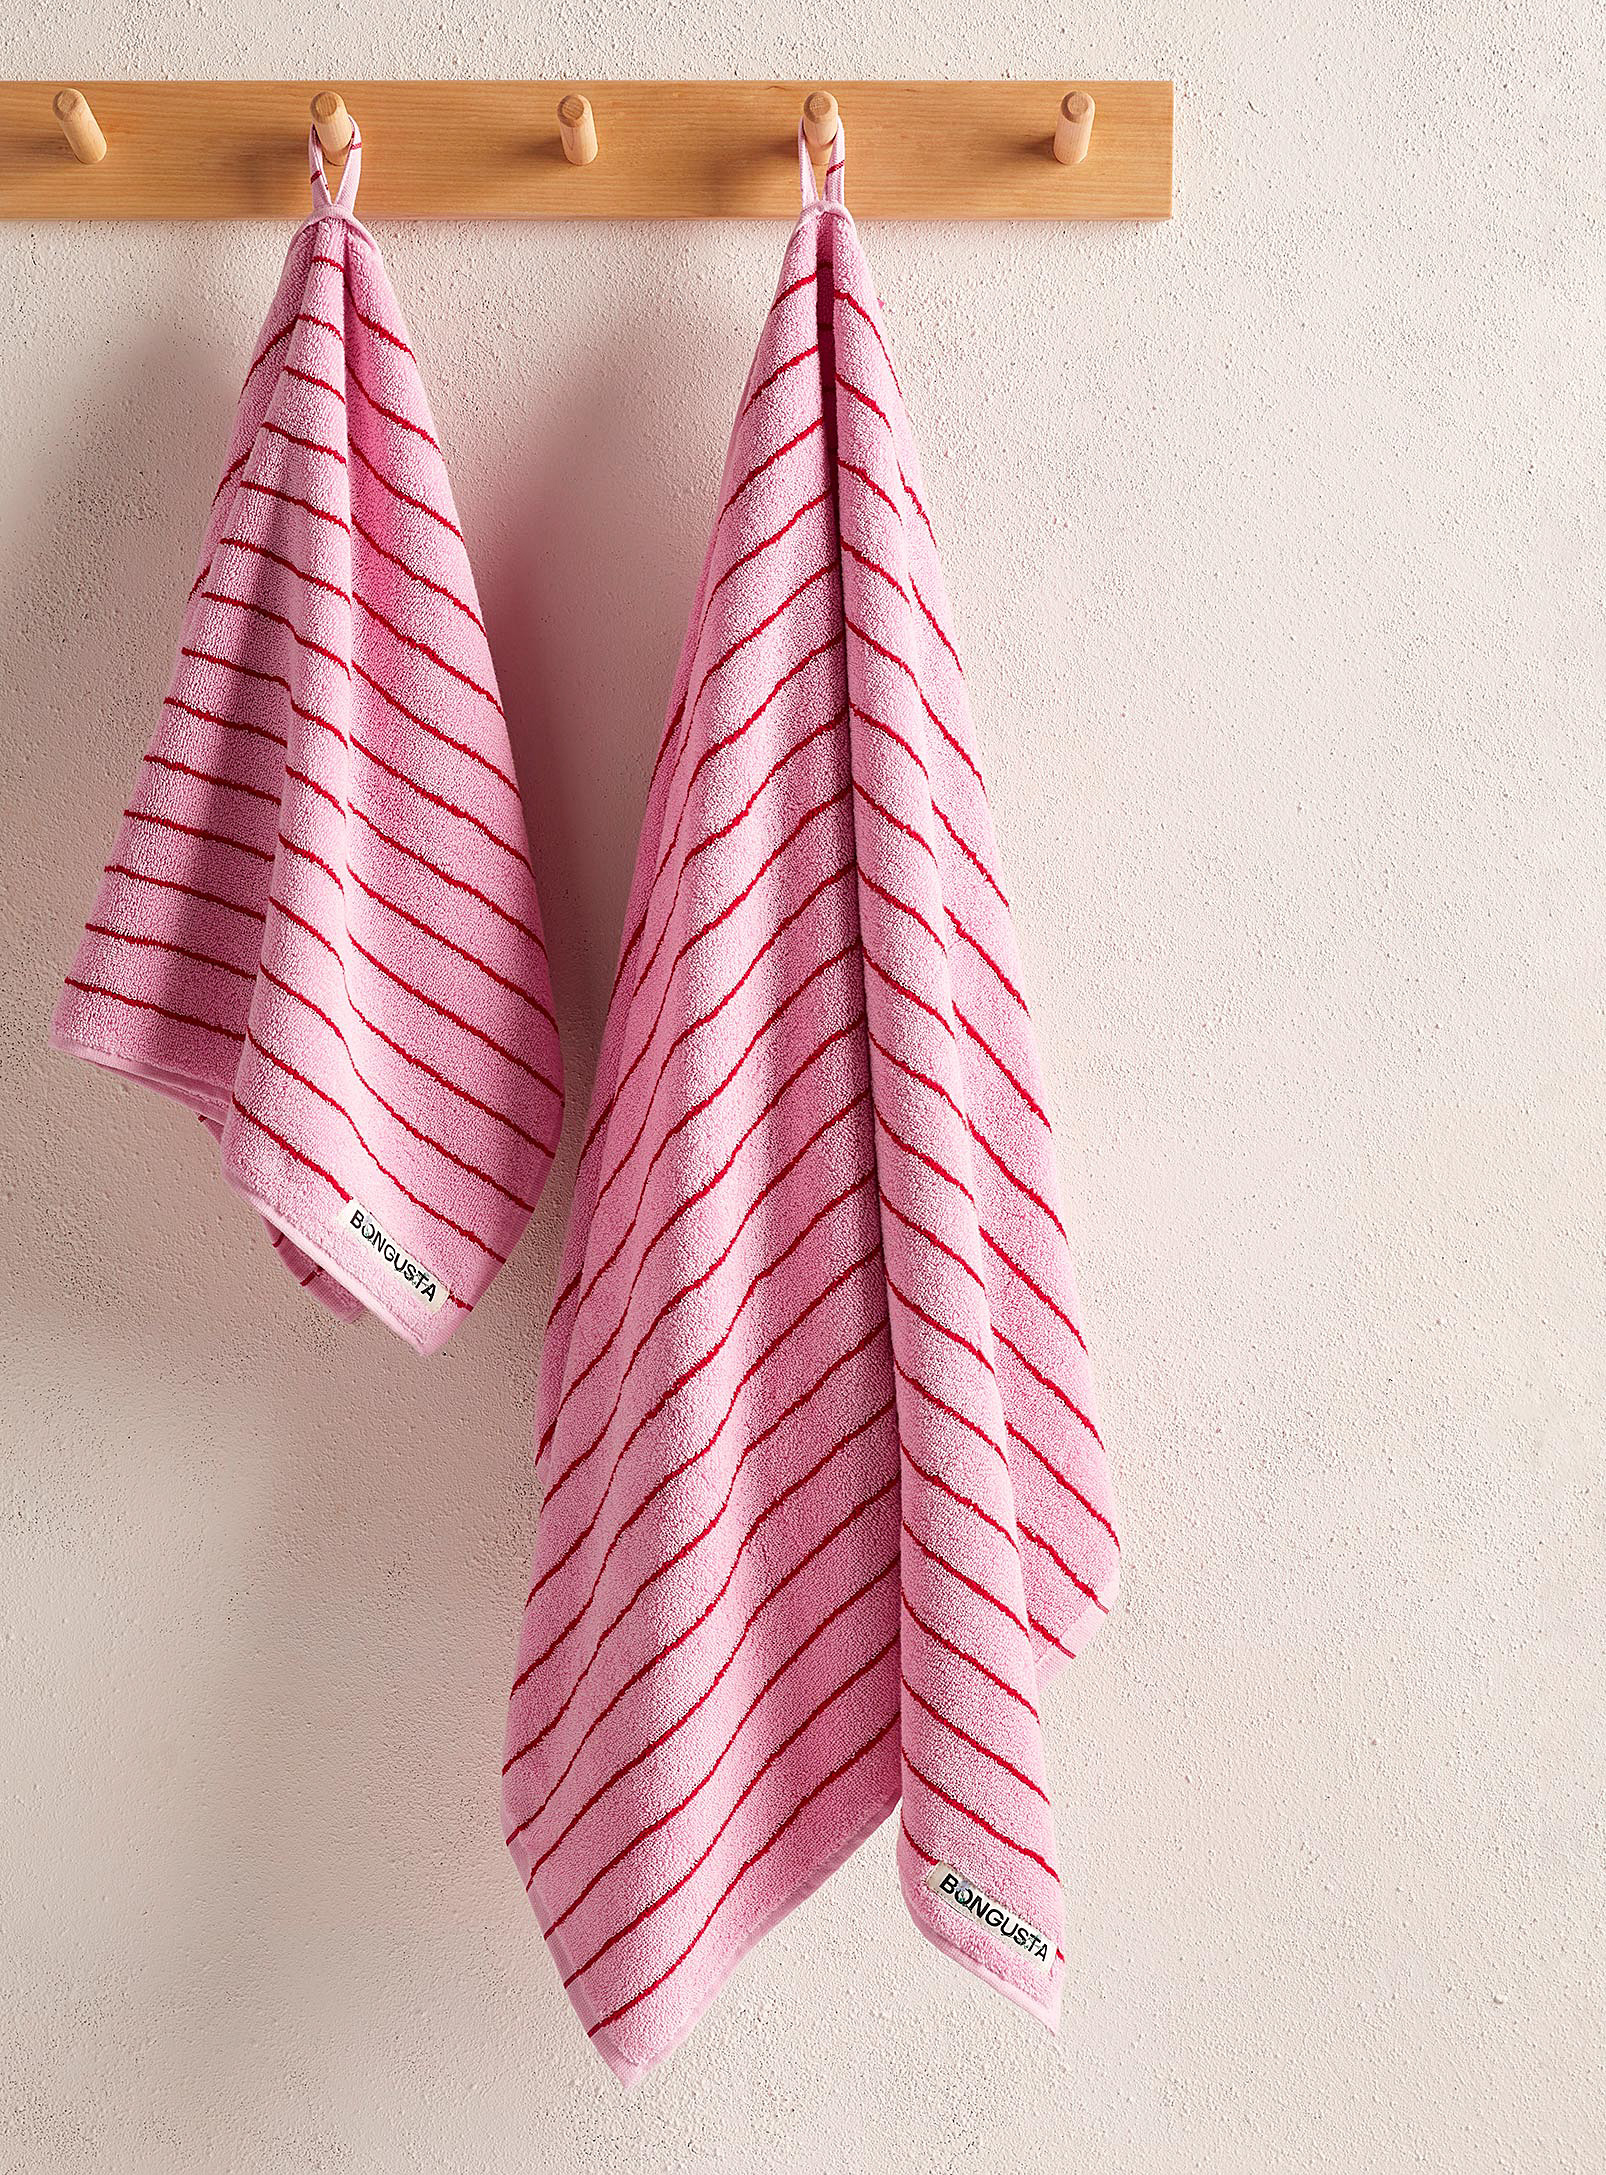 Bongusta Naram Striped Towels In Pink